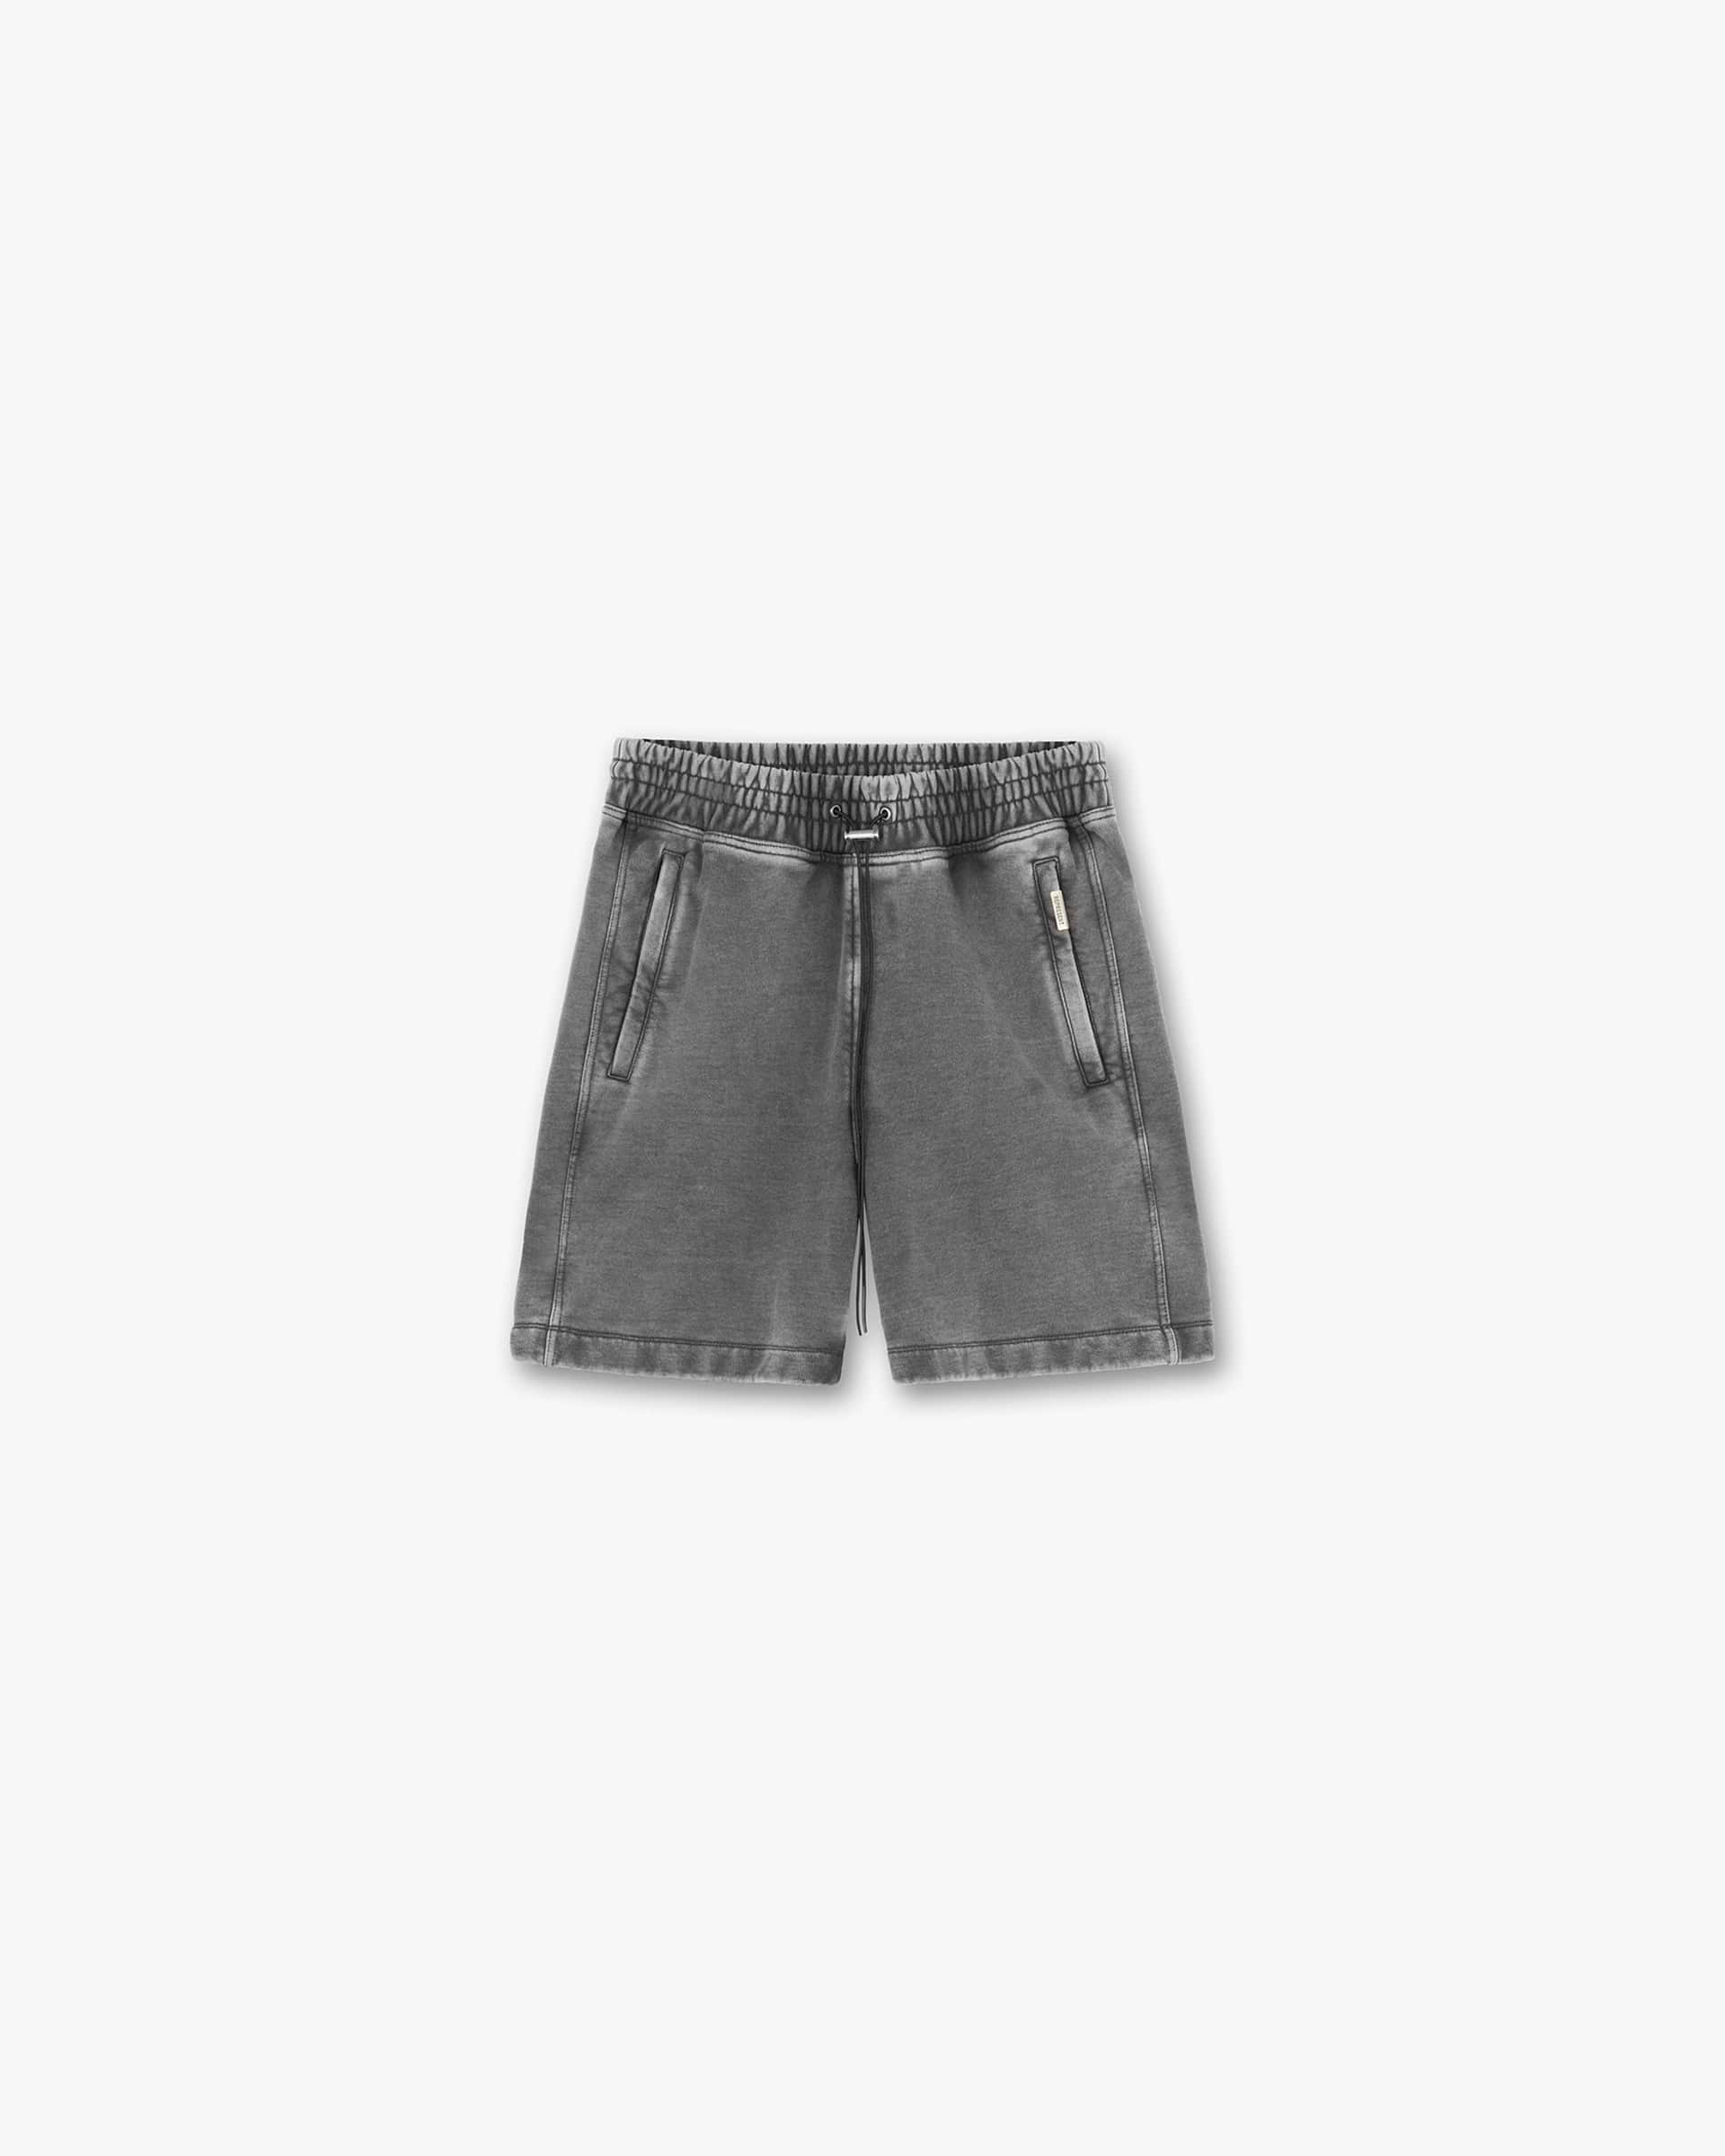 Blank Shorts | Vintage Grey Shorts BLANKS | Represent Clo